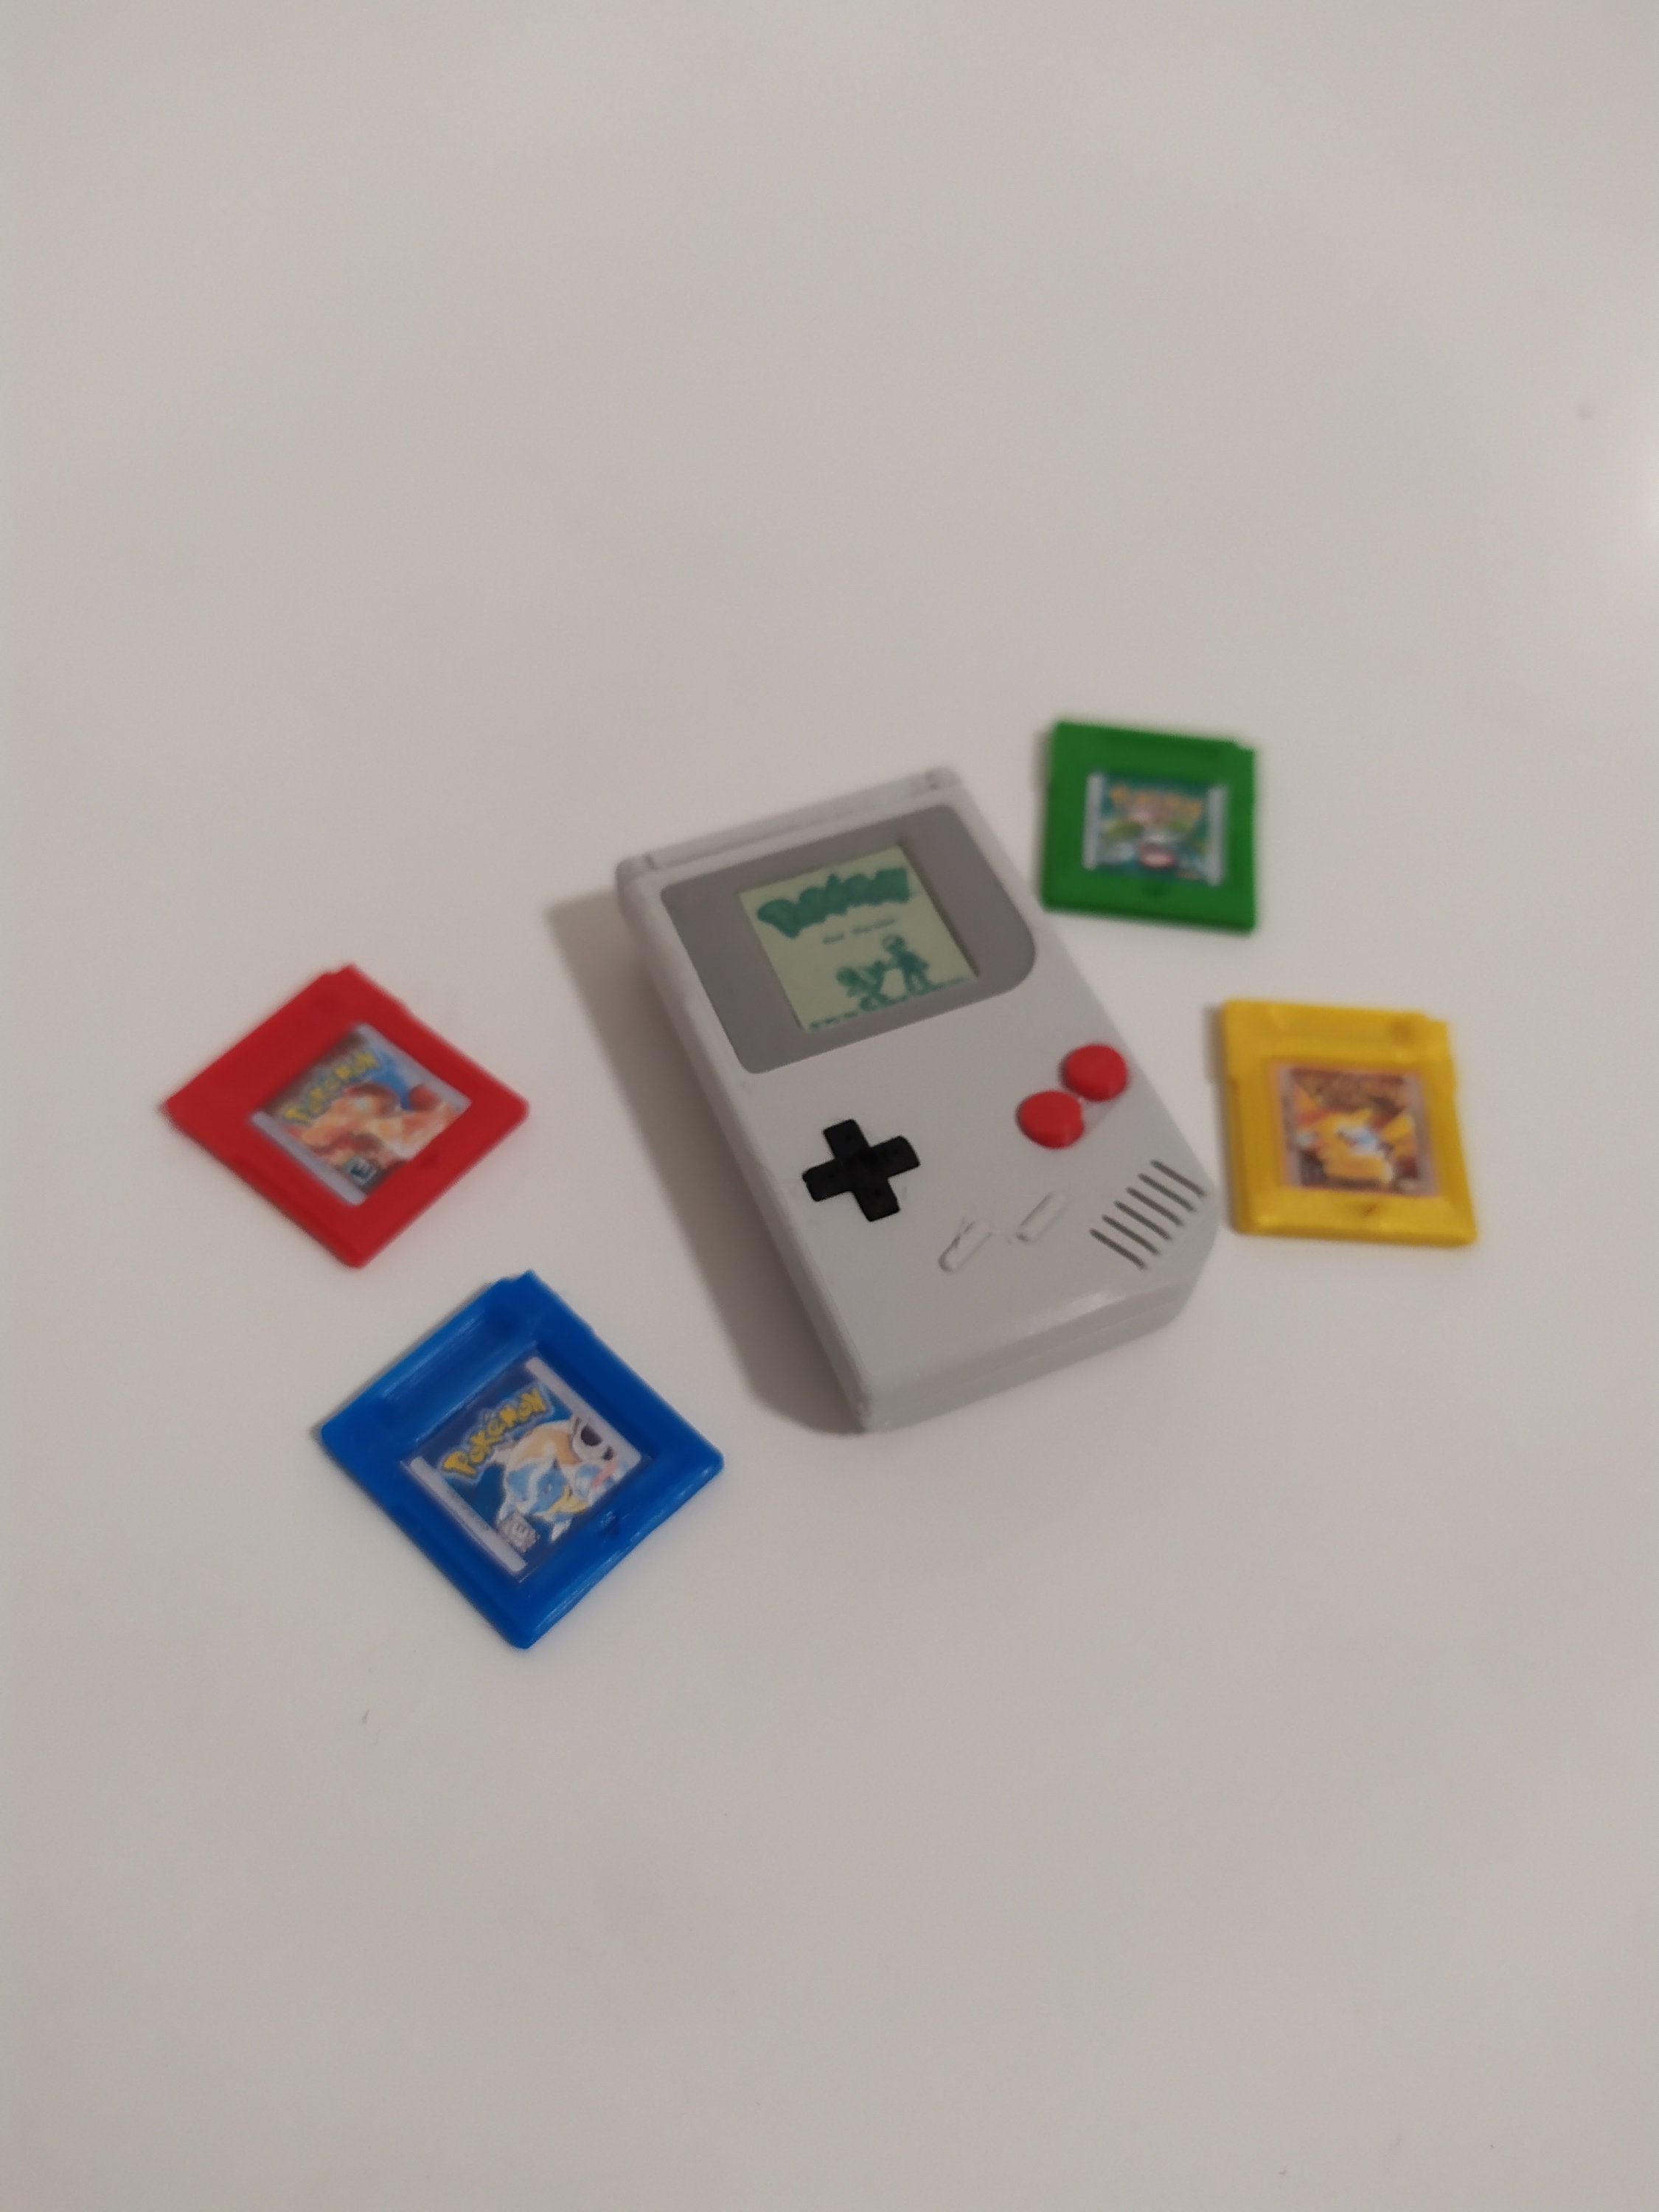 Hot Video-Game 8 Bit Retro Mini Pocket Gameboy Argentina